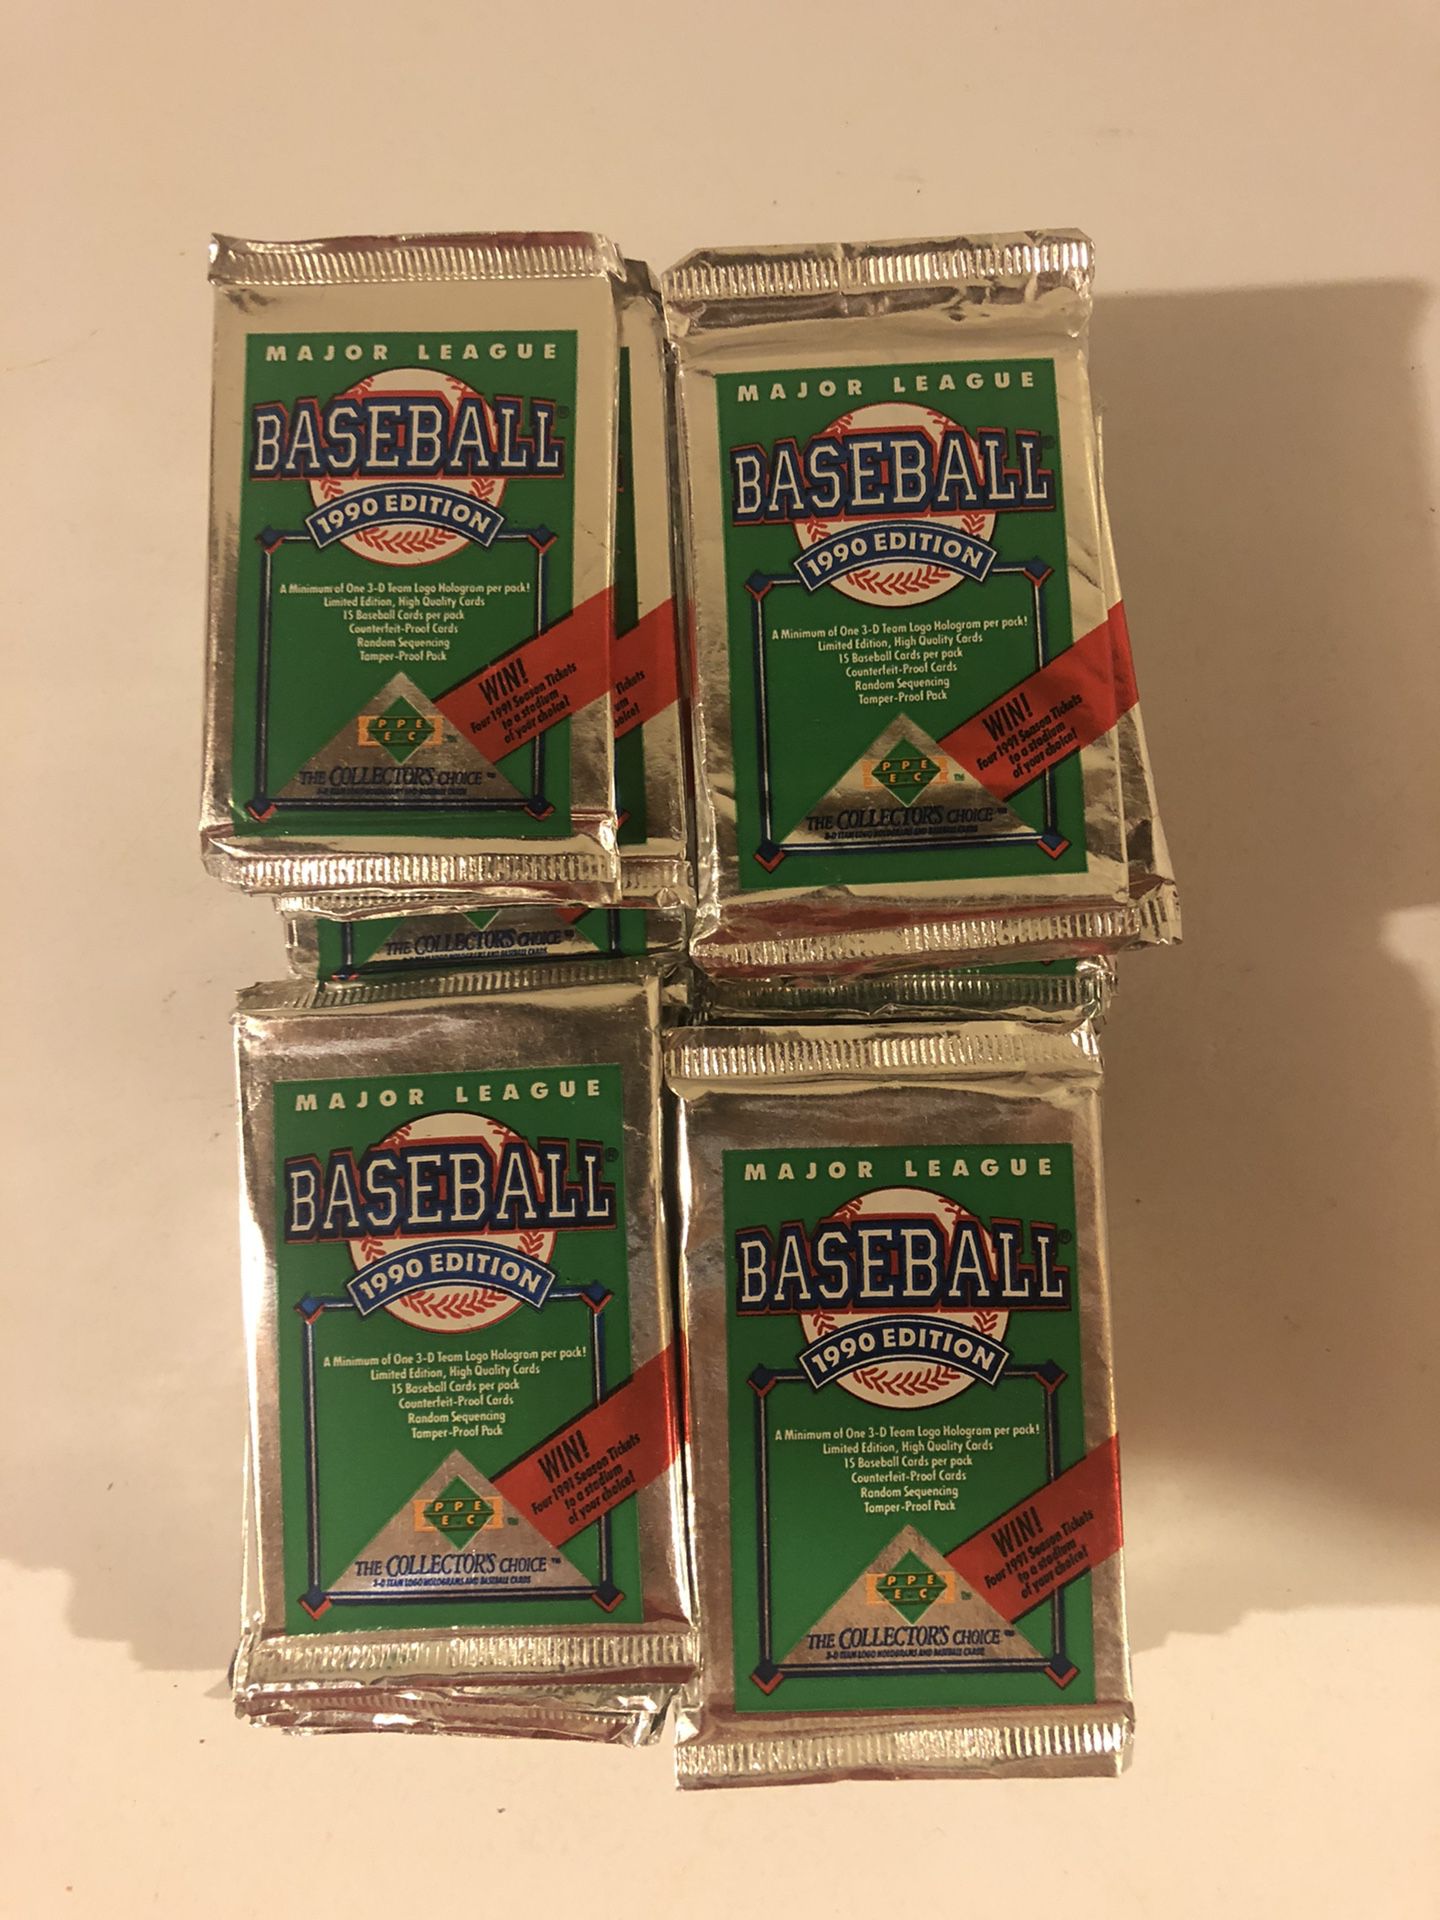 1990 Upper Deck unopened baseball card packs